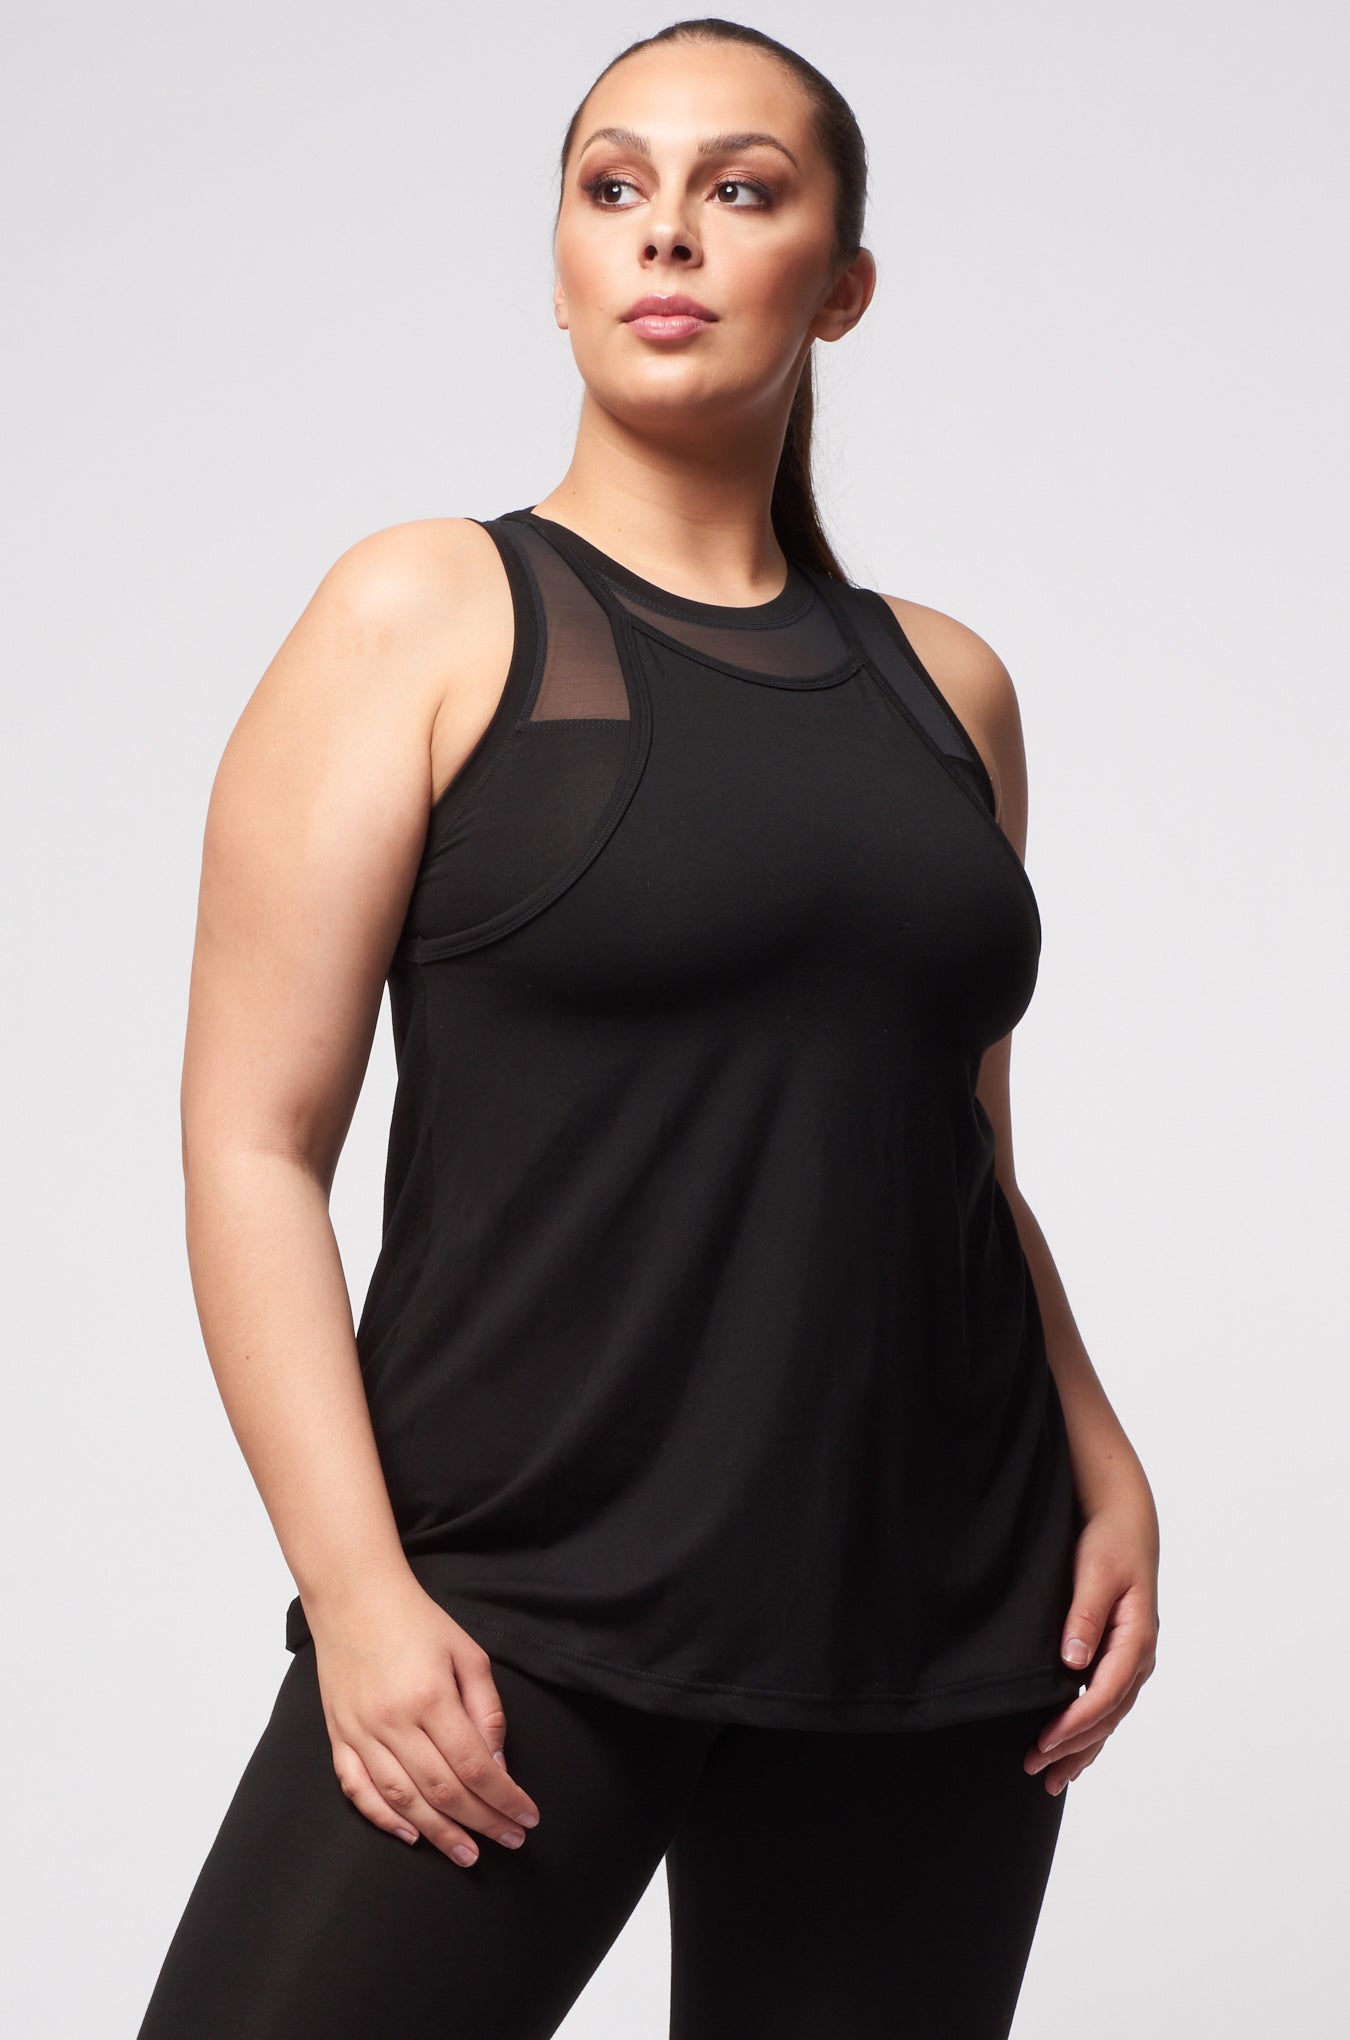 Women Gym Tank Top Yoga Wear Built in Bra Spandex Loose Fitted